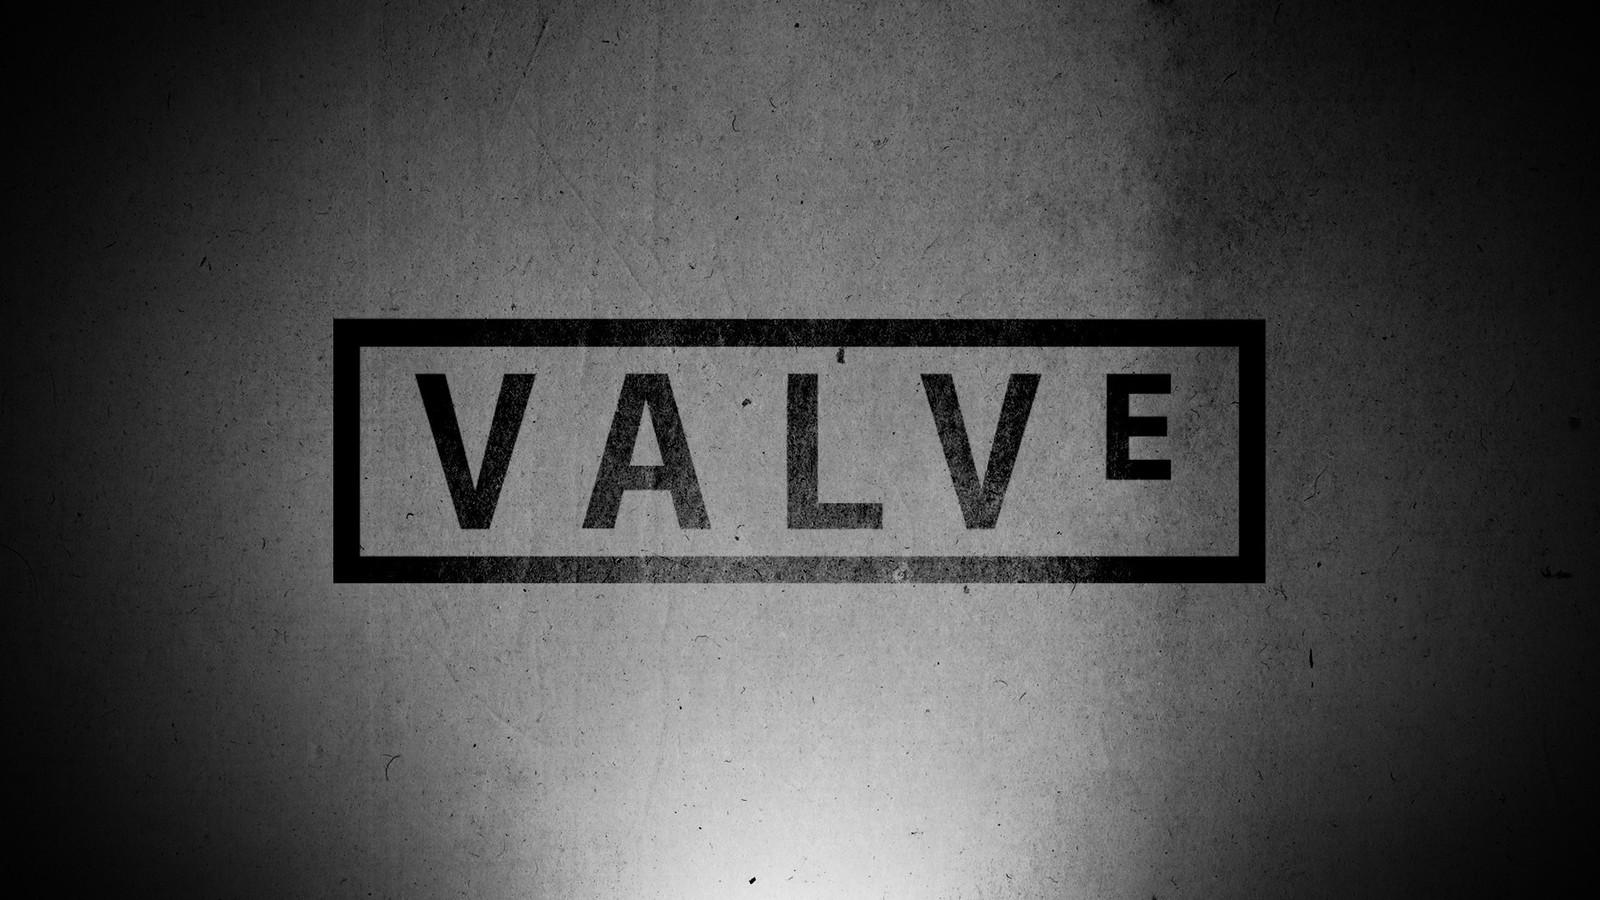 Valve wraca do tworzenia gier